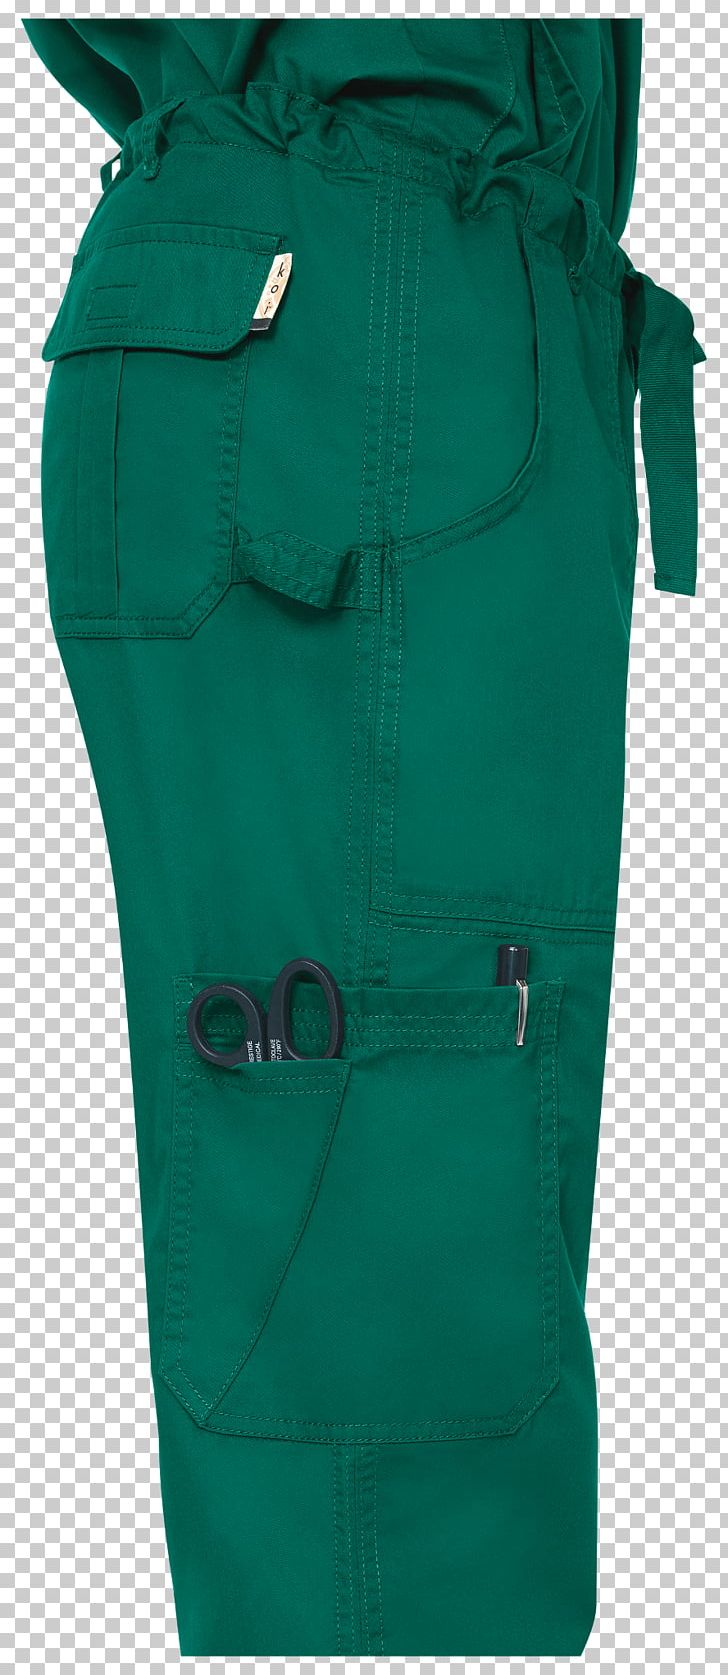 Green Waist Pants PNG, Clipart, Green, Pants, Pilot Uniform, Pocket, Trousers Free PNG Download